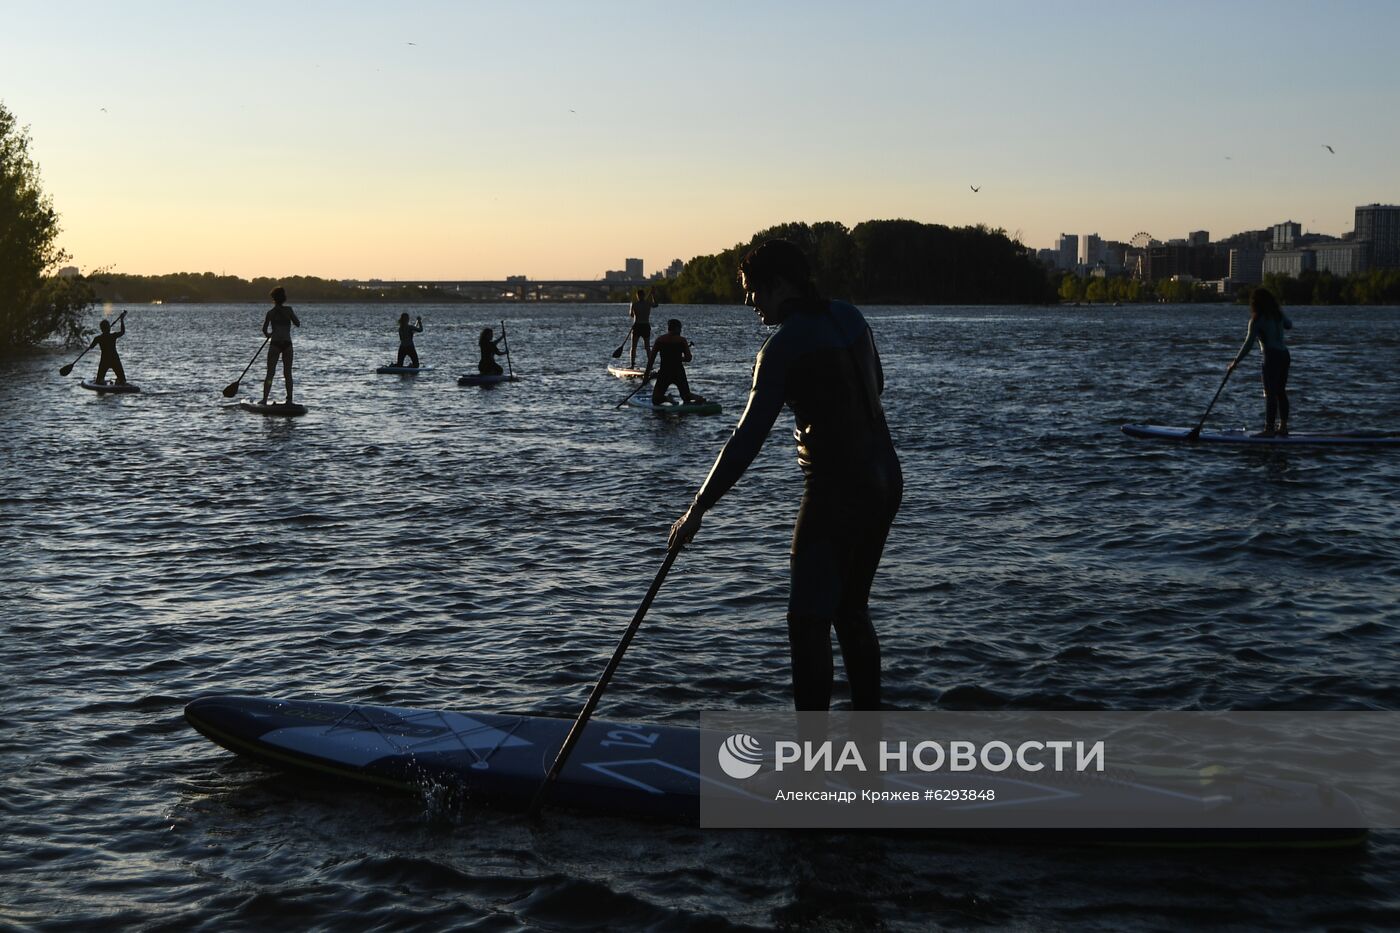 Сапсерфинг в Новосибирске